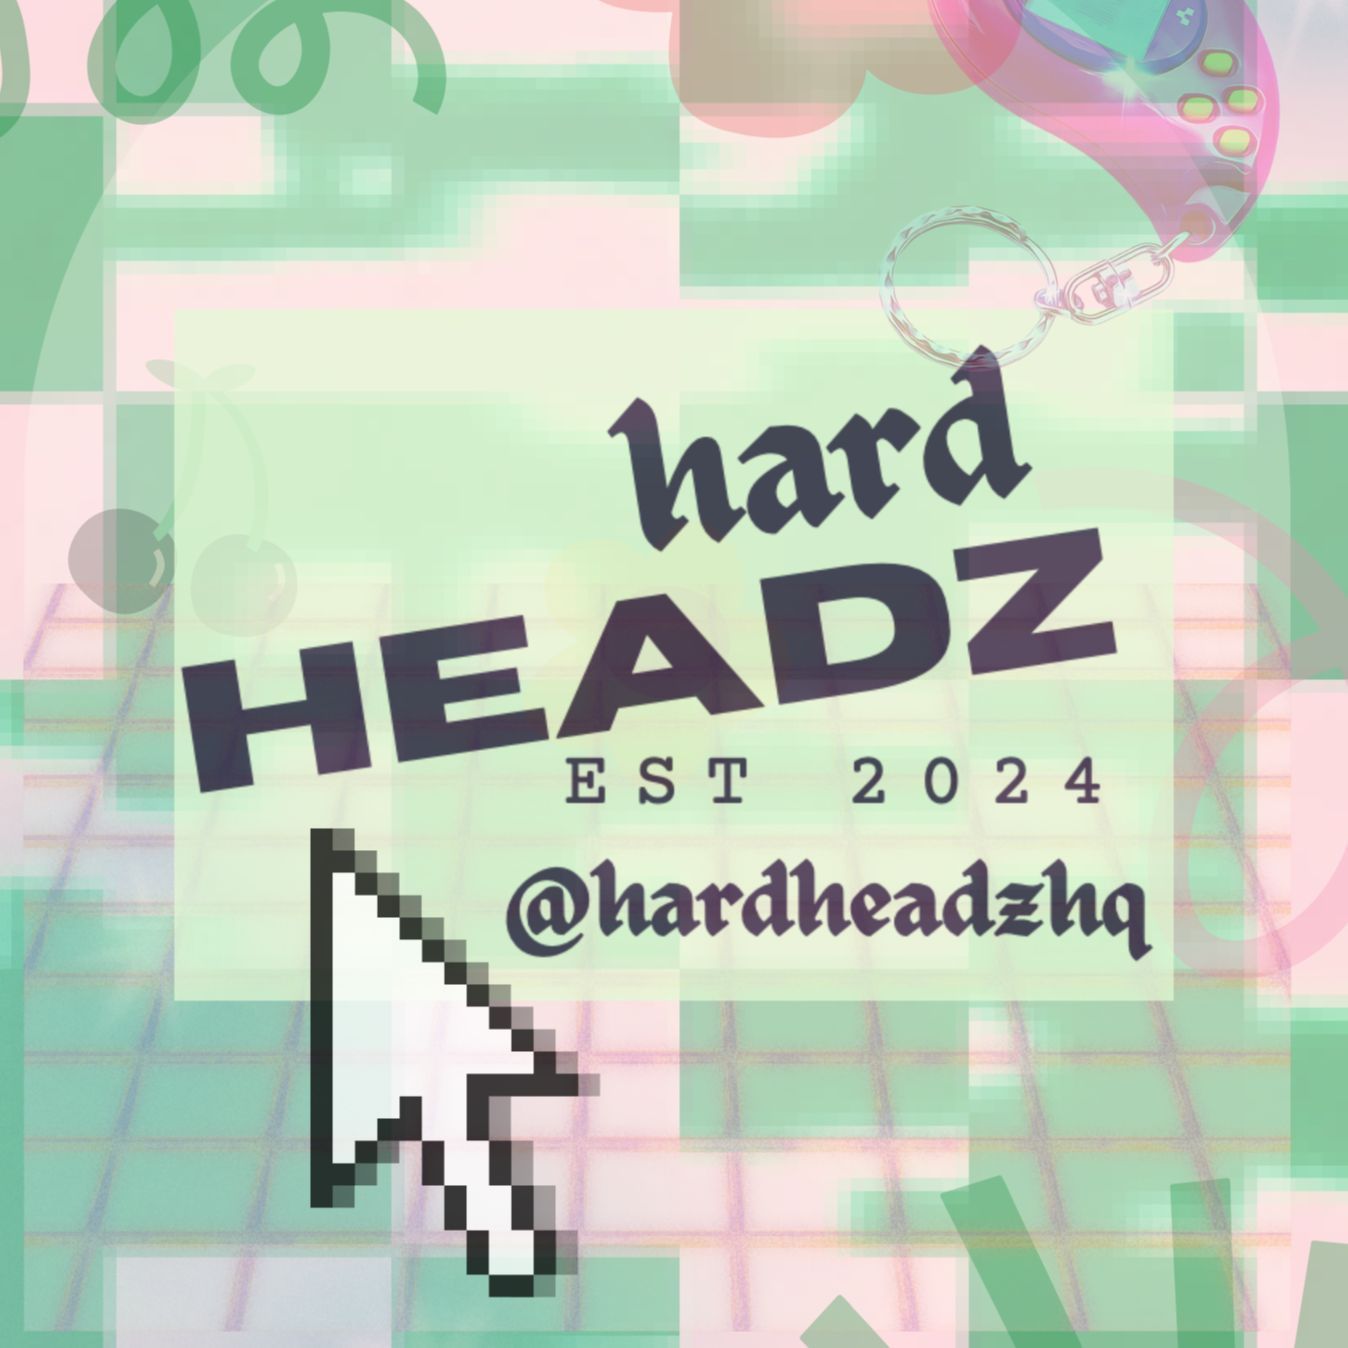 Hard Headz, 662 Payne Ave, St Paul, 55130